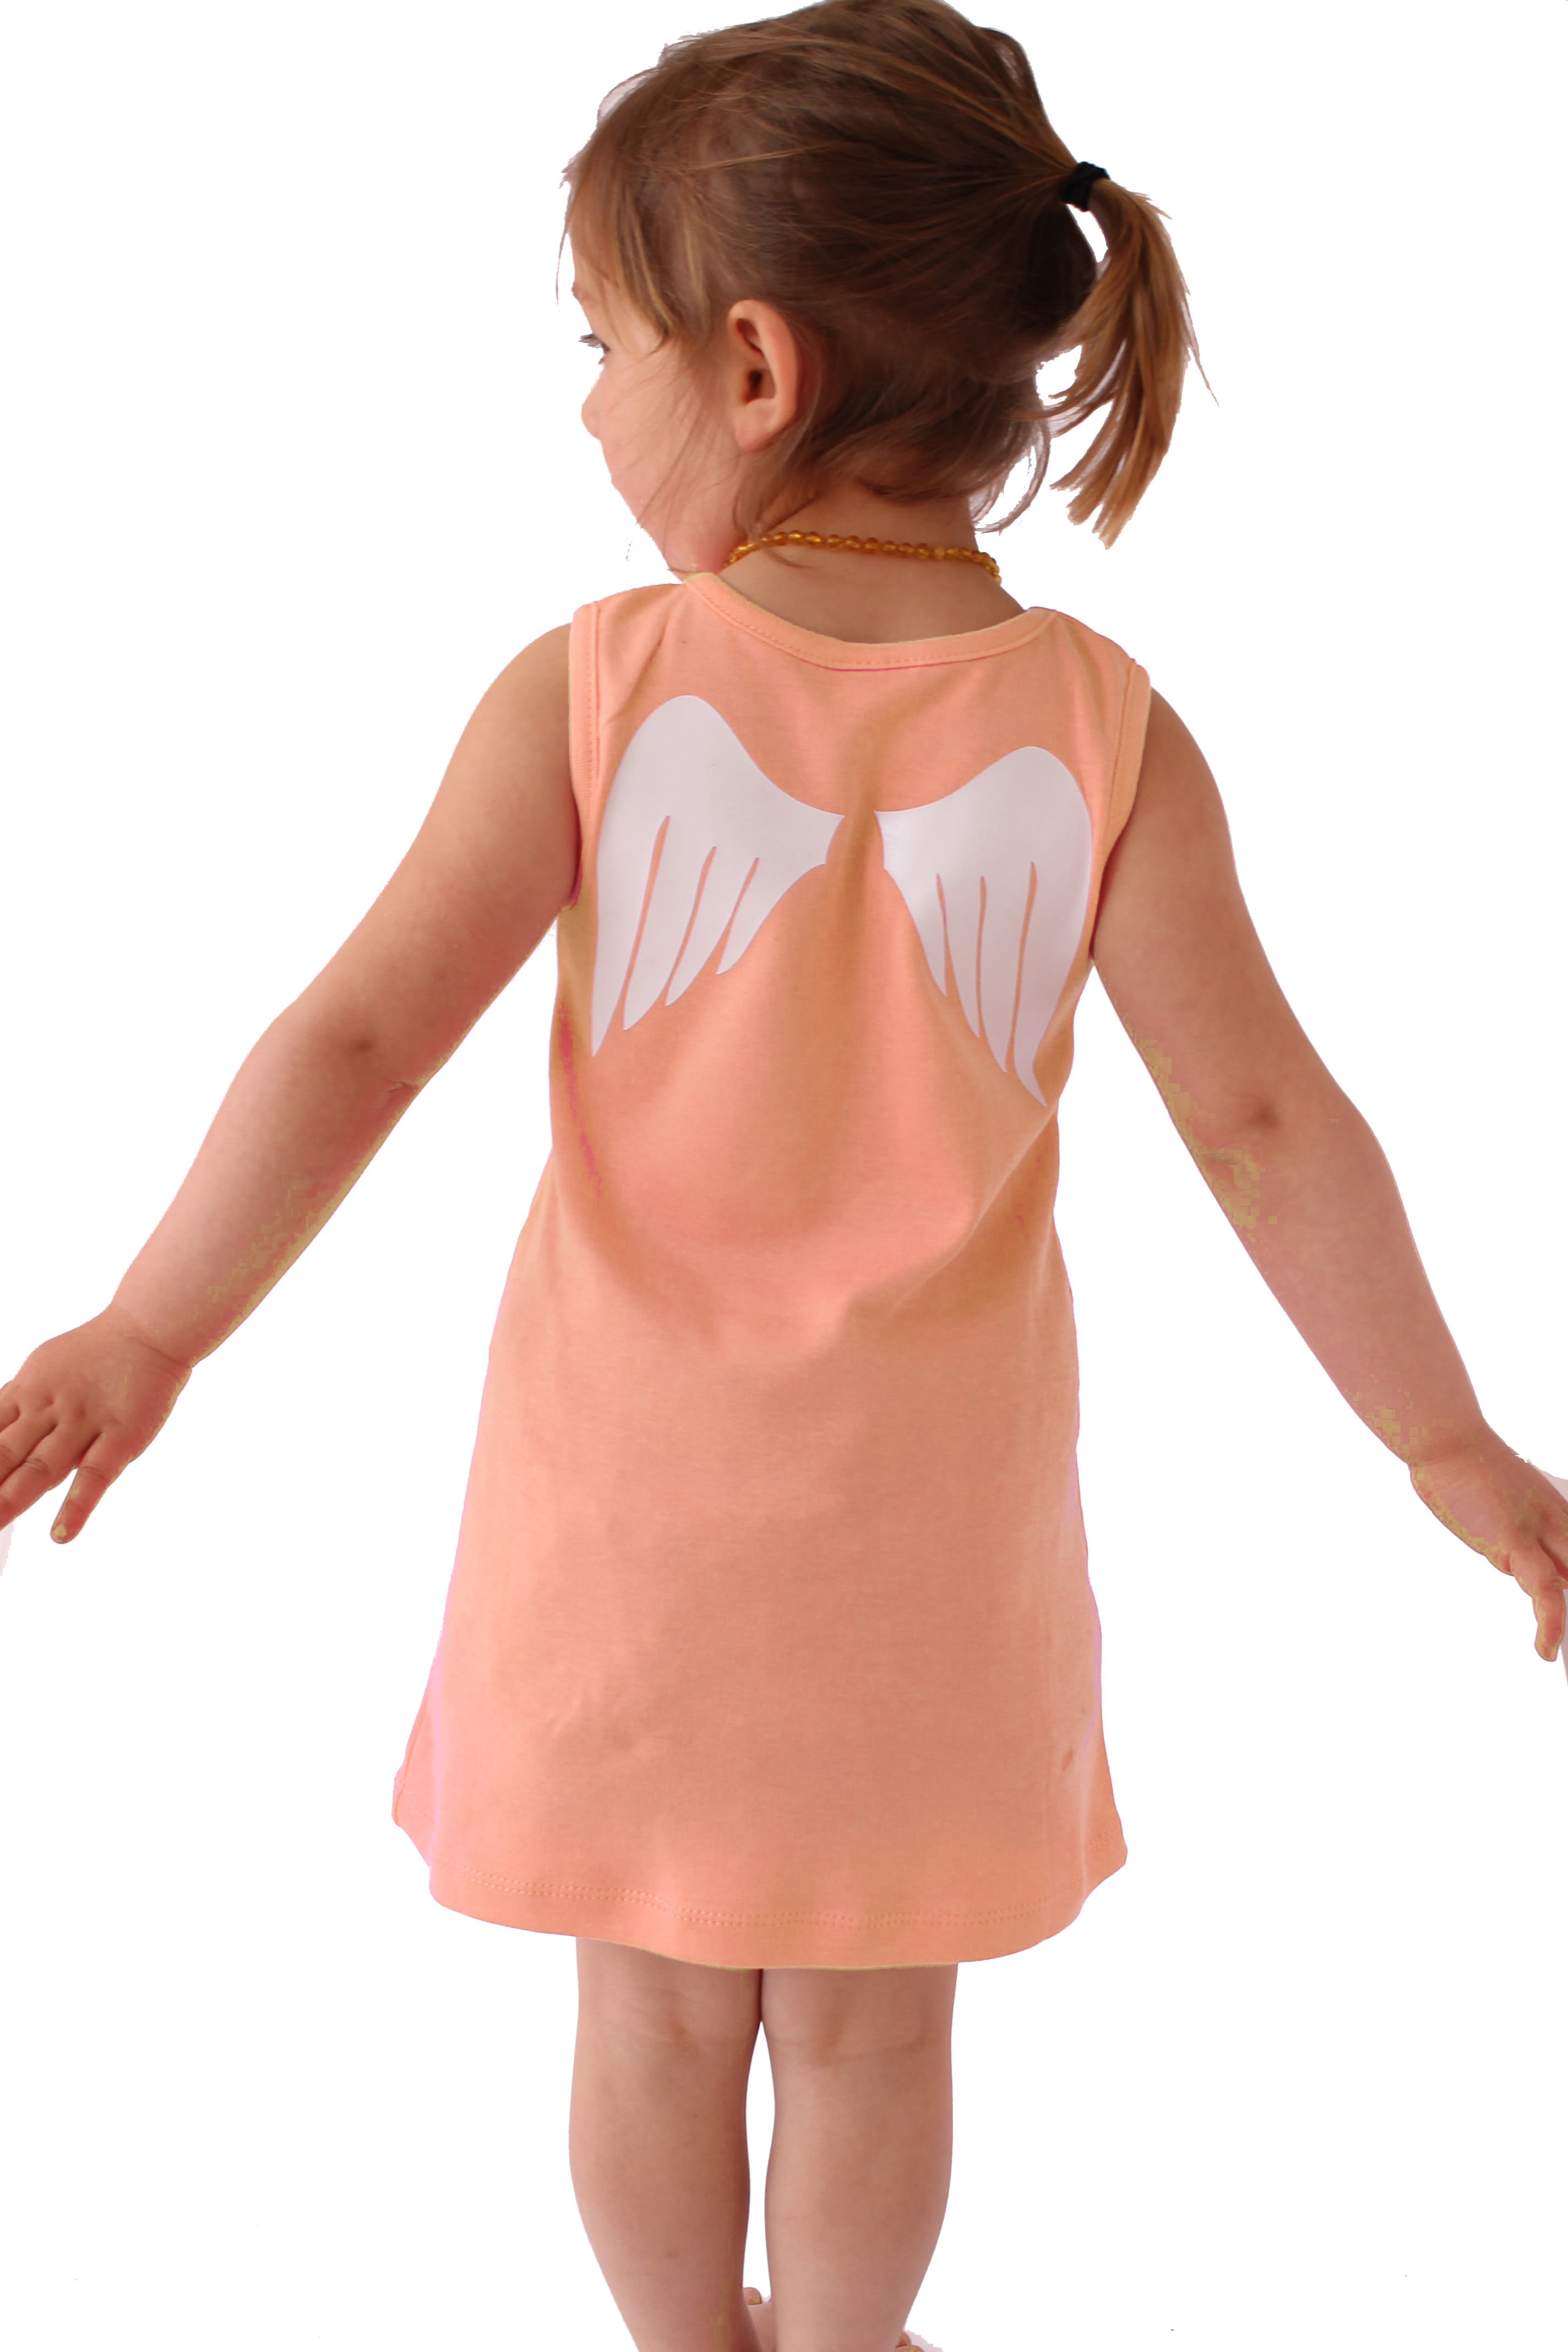 20 Branded Cute Angel Wings Print Baby & Toddler Dresses (PEACH 5 each size)